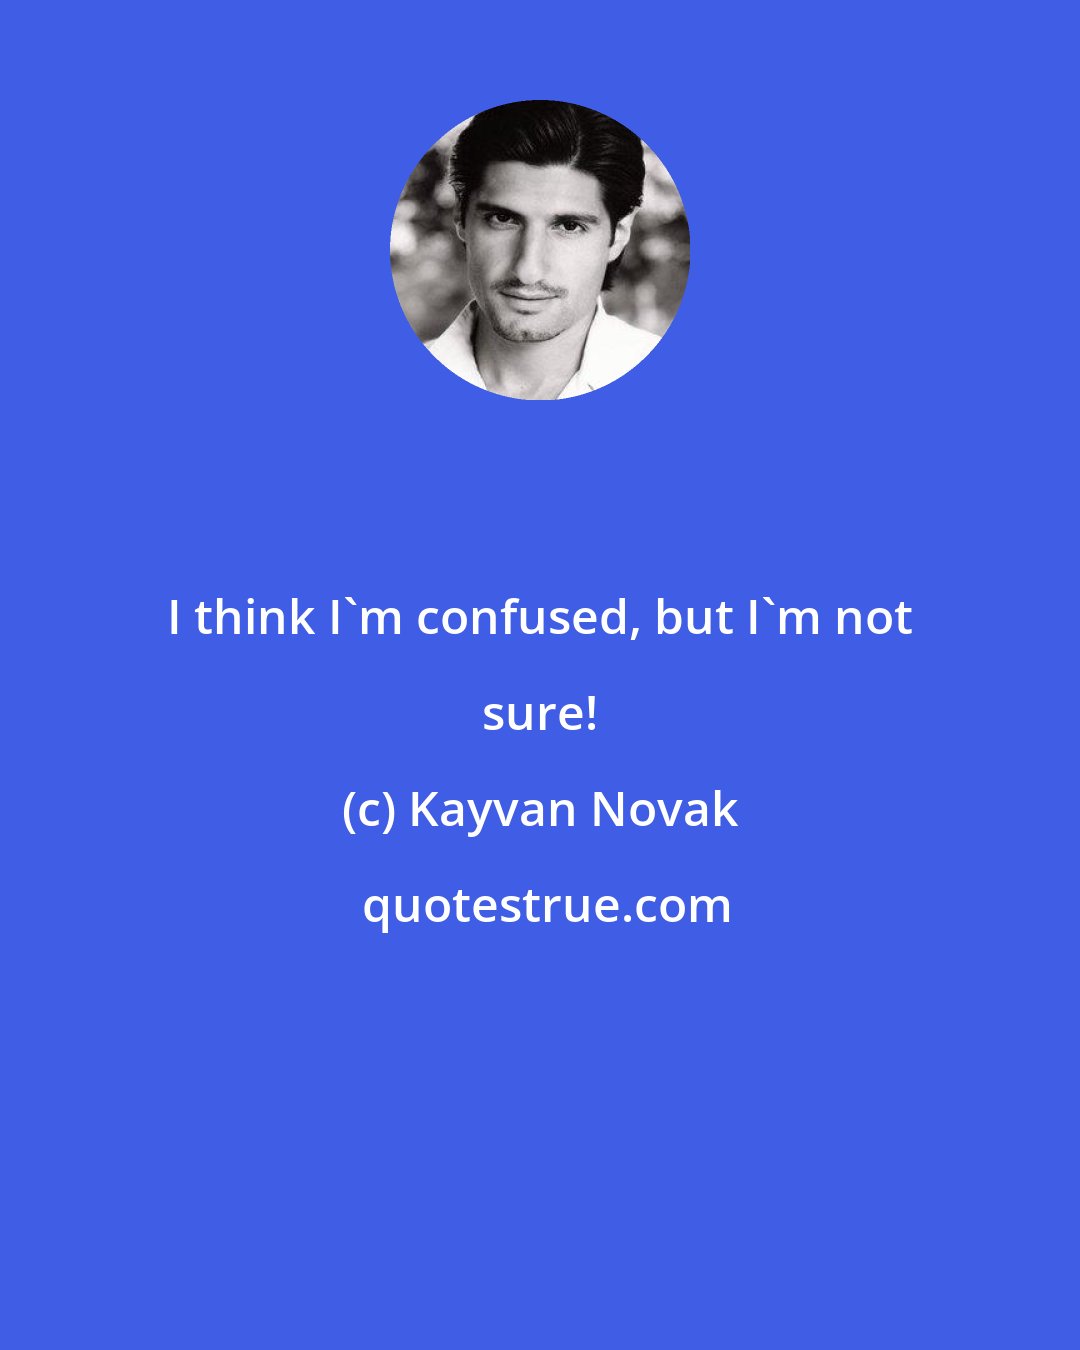 Kayvan Novak: I think I'm confused, but I'm not sure!